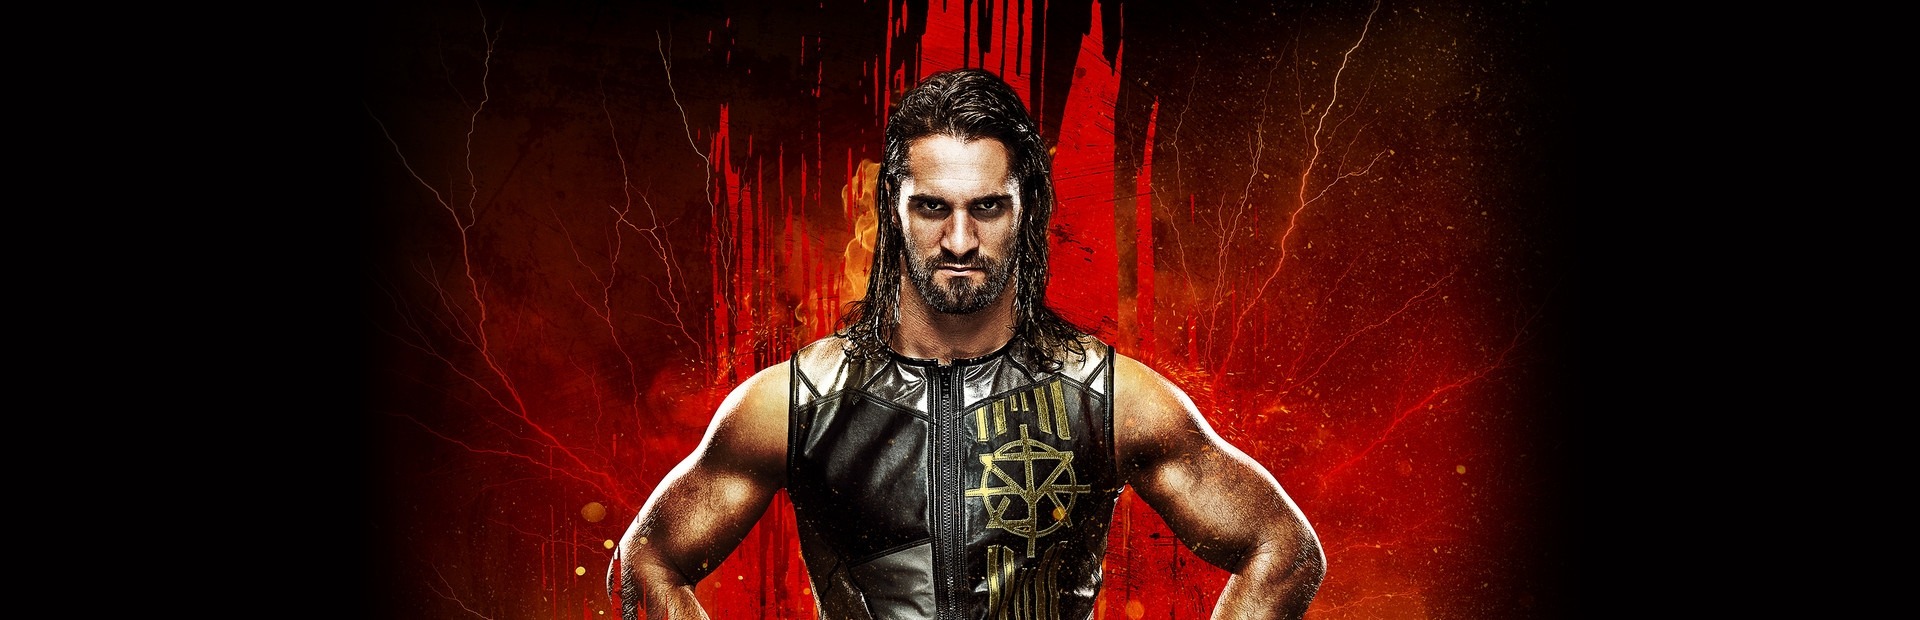 Banner WWE 2K18 - Kurt Angle Pack